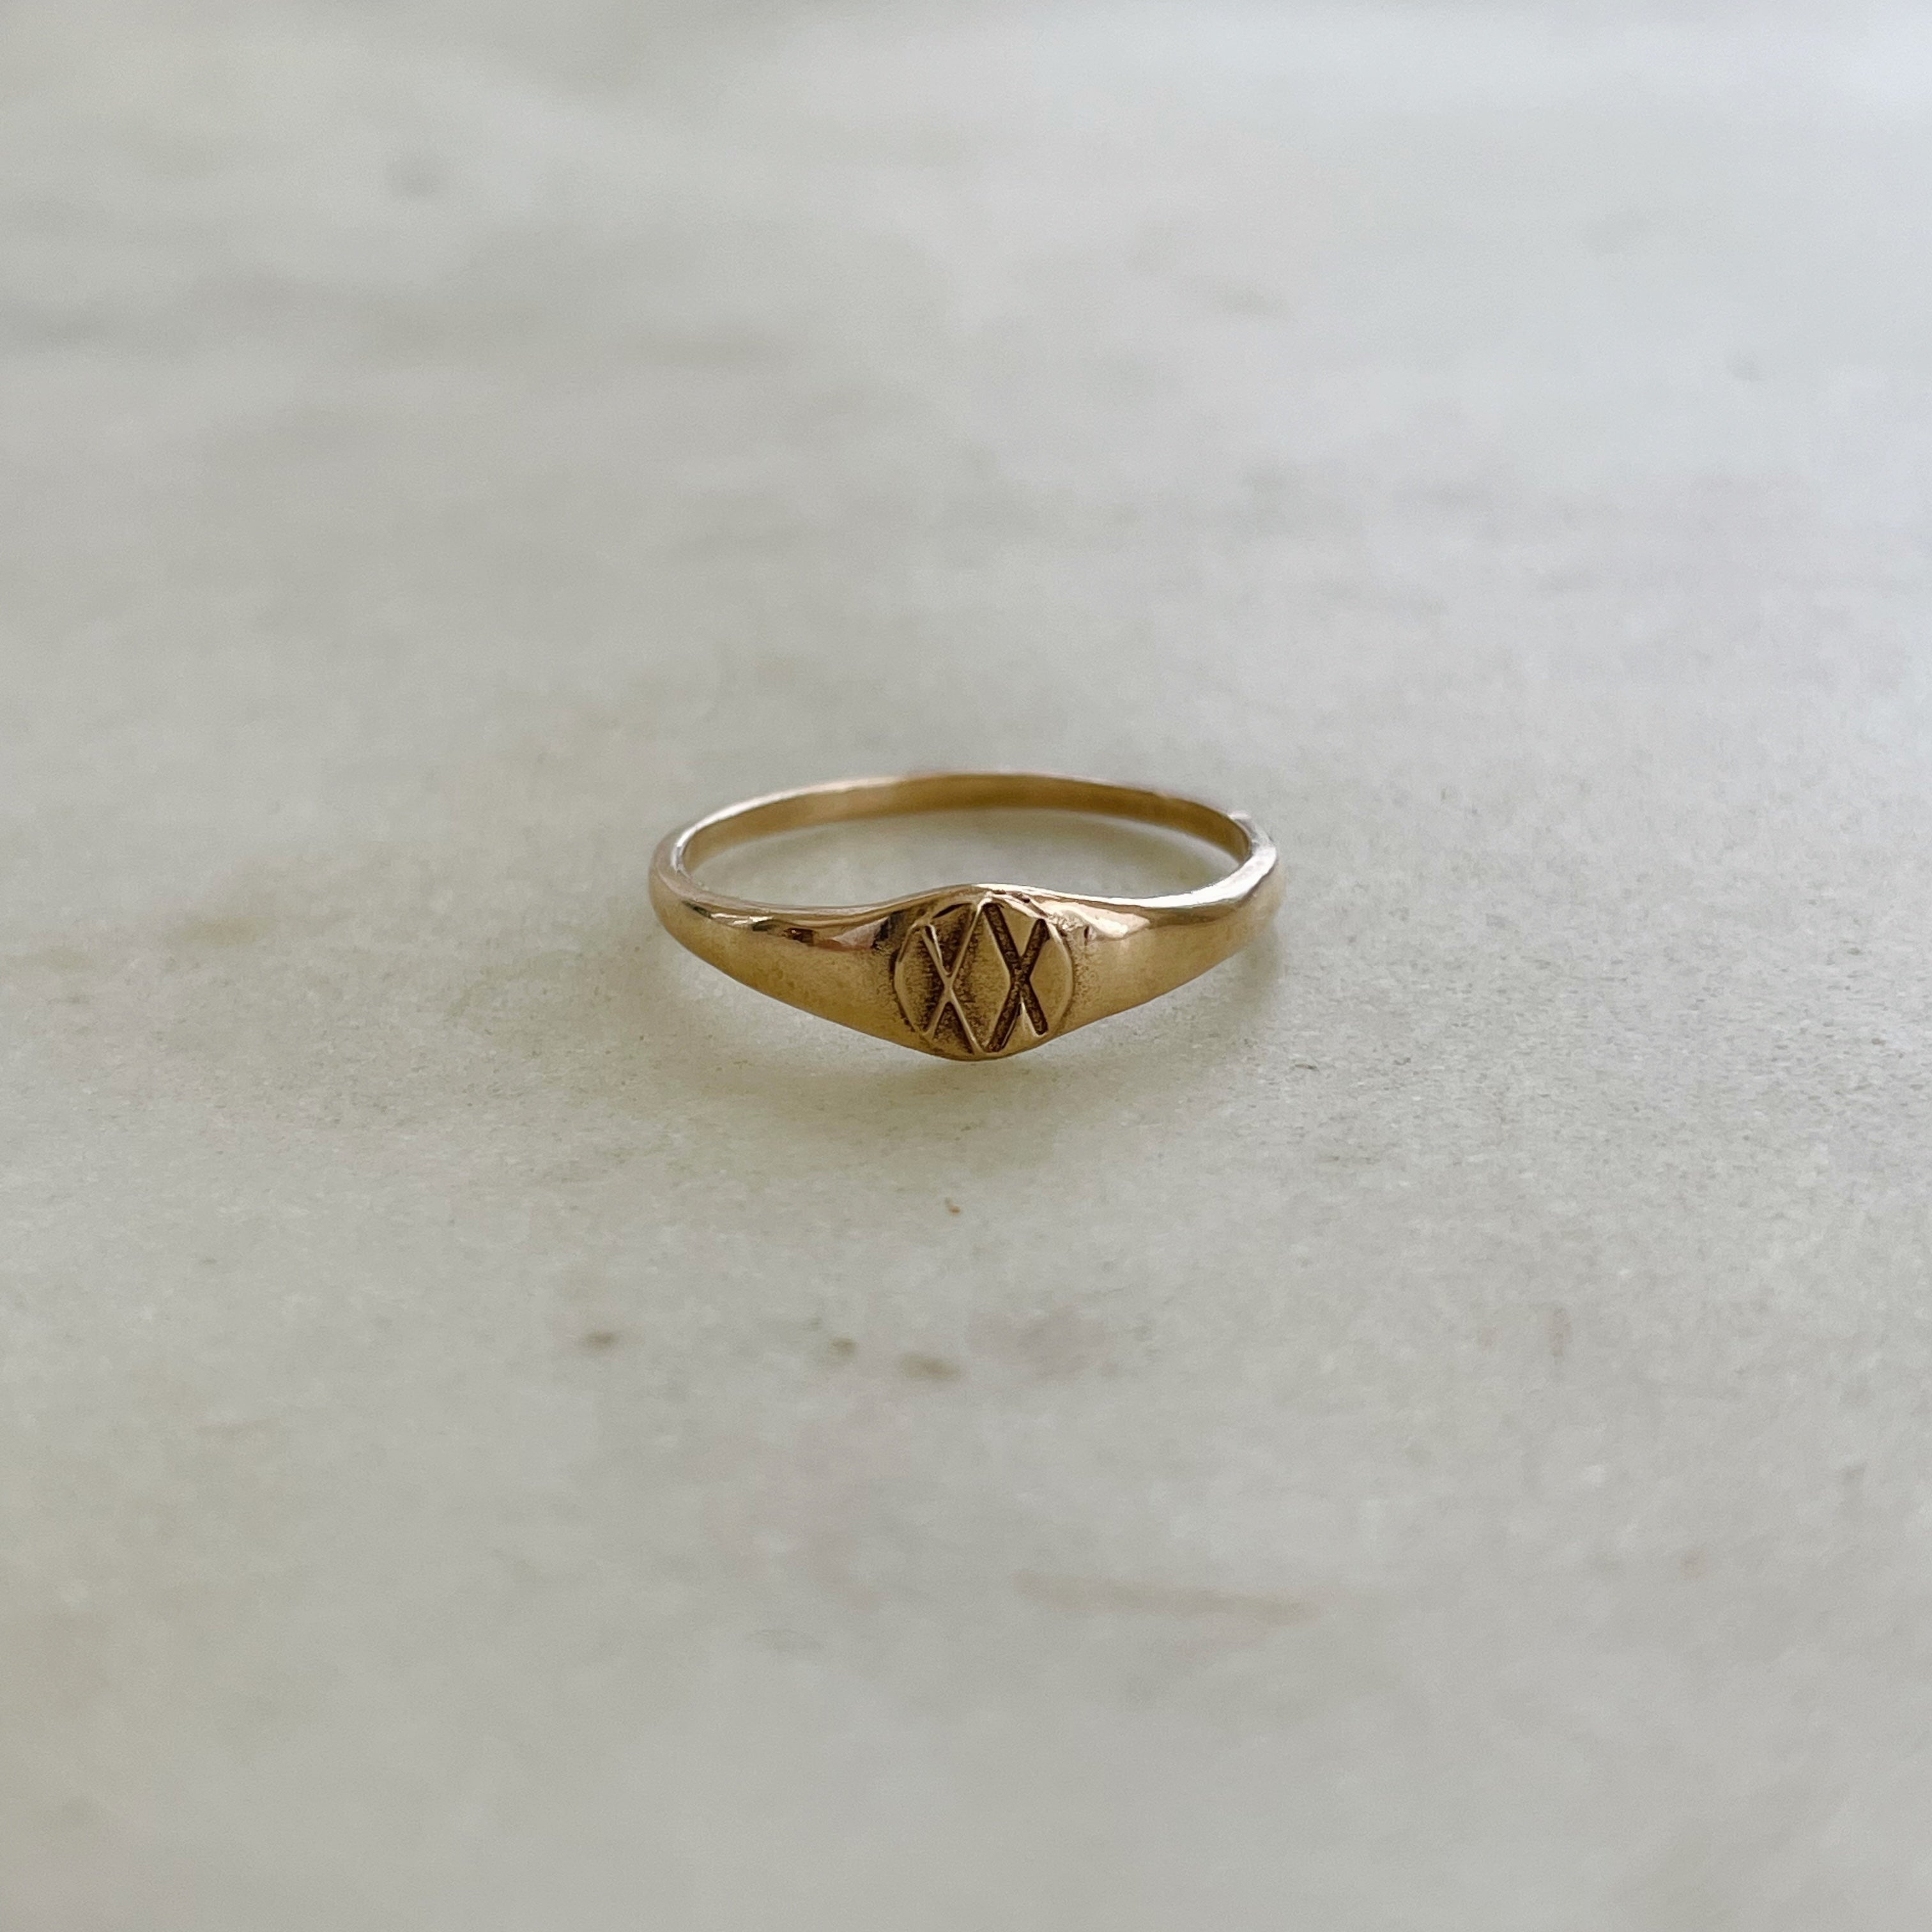 10k Gold Diamond Ring Vintage Rings for Women Size 6 - Etsy India